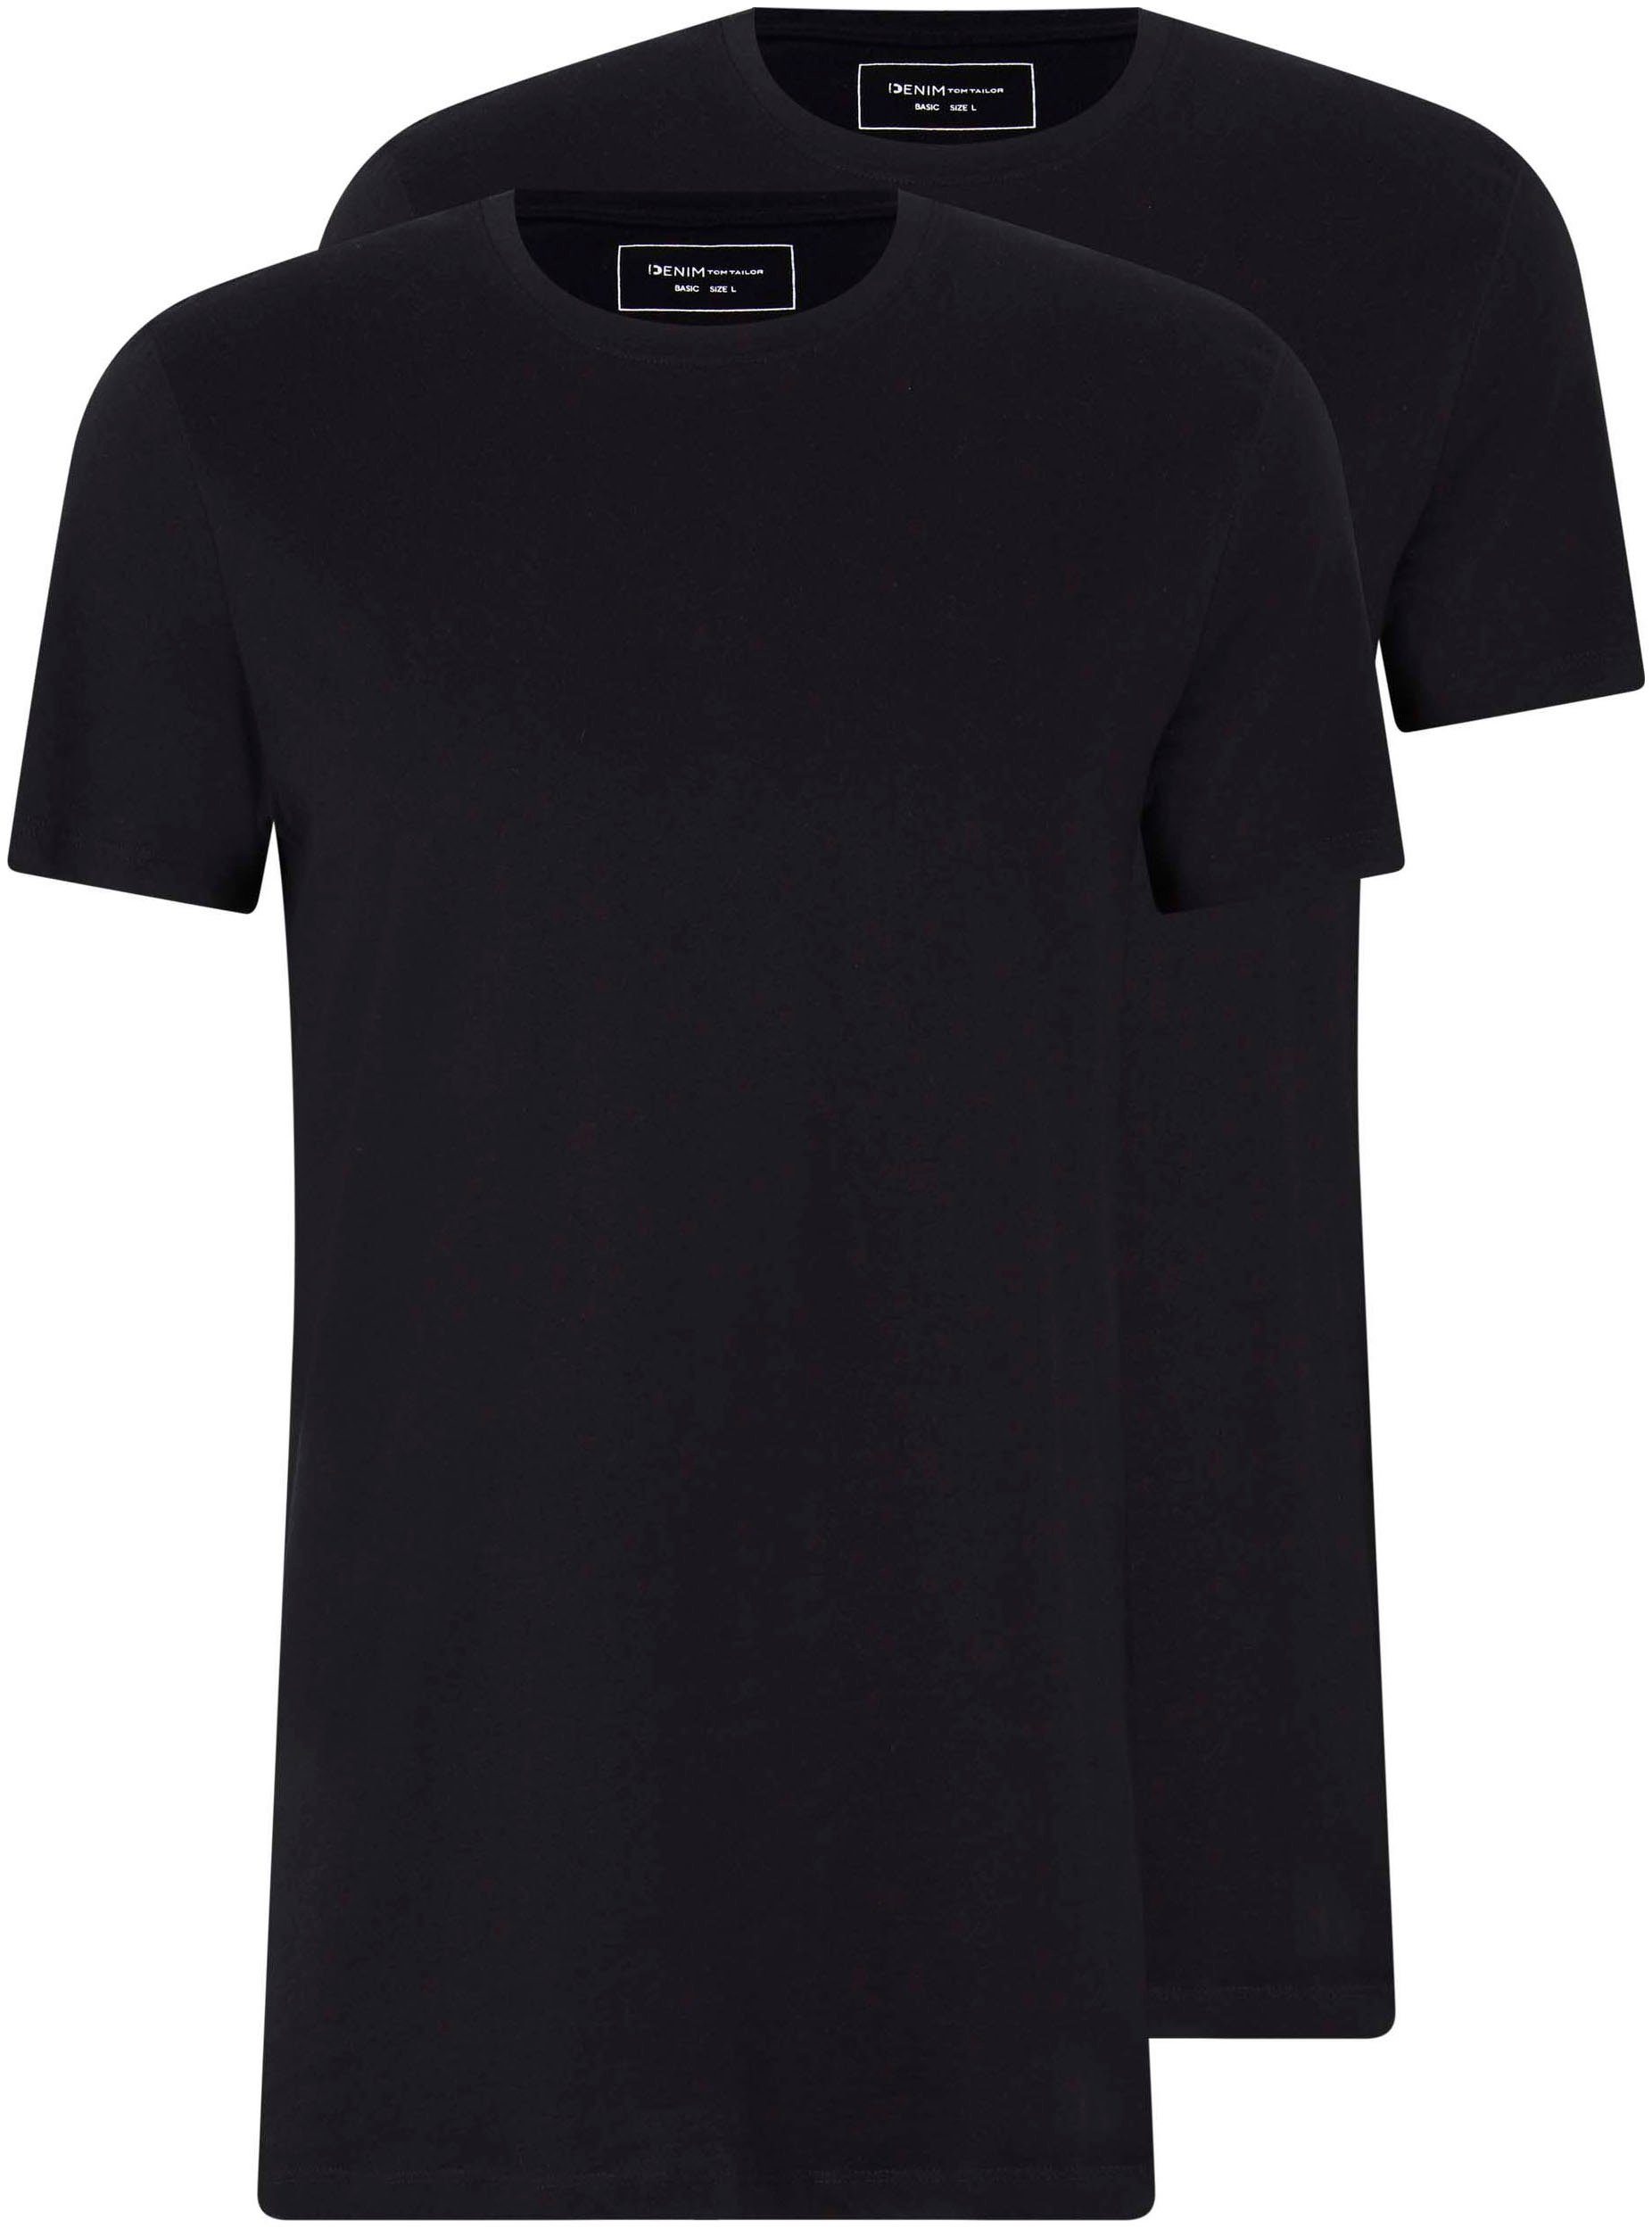 TOM TAILOR Denim T-Shirt (Set) im Set schwarz